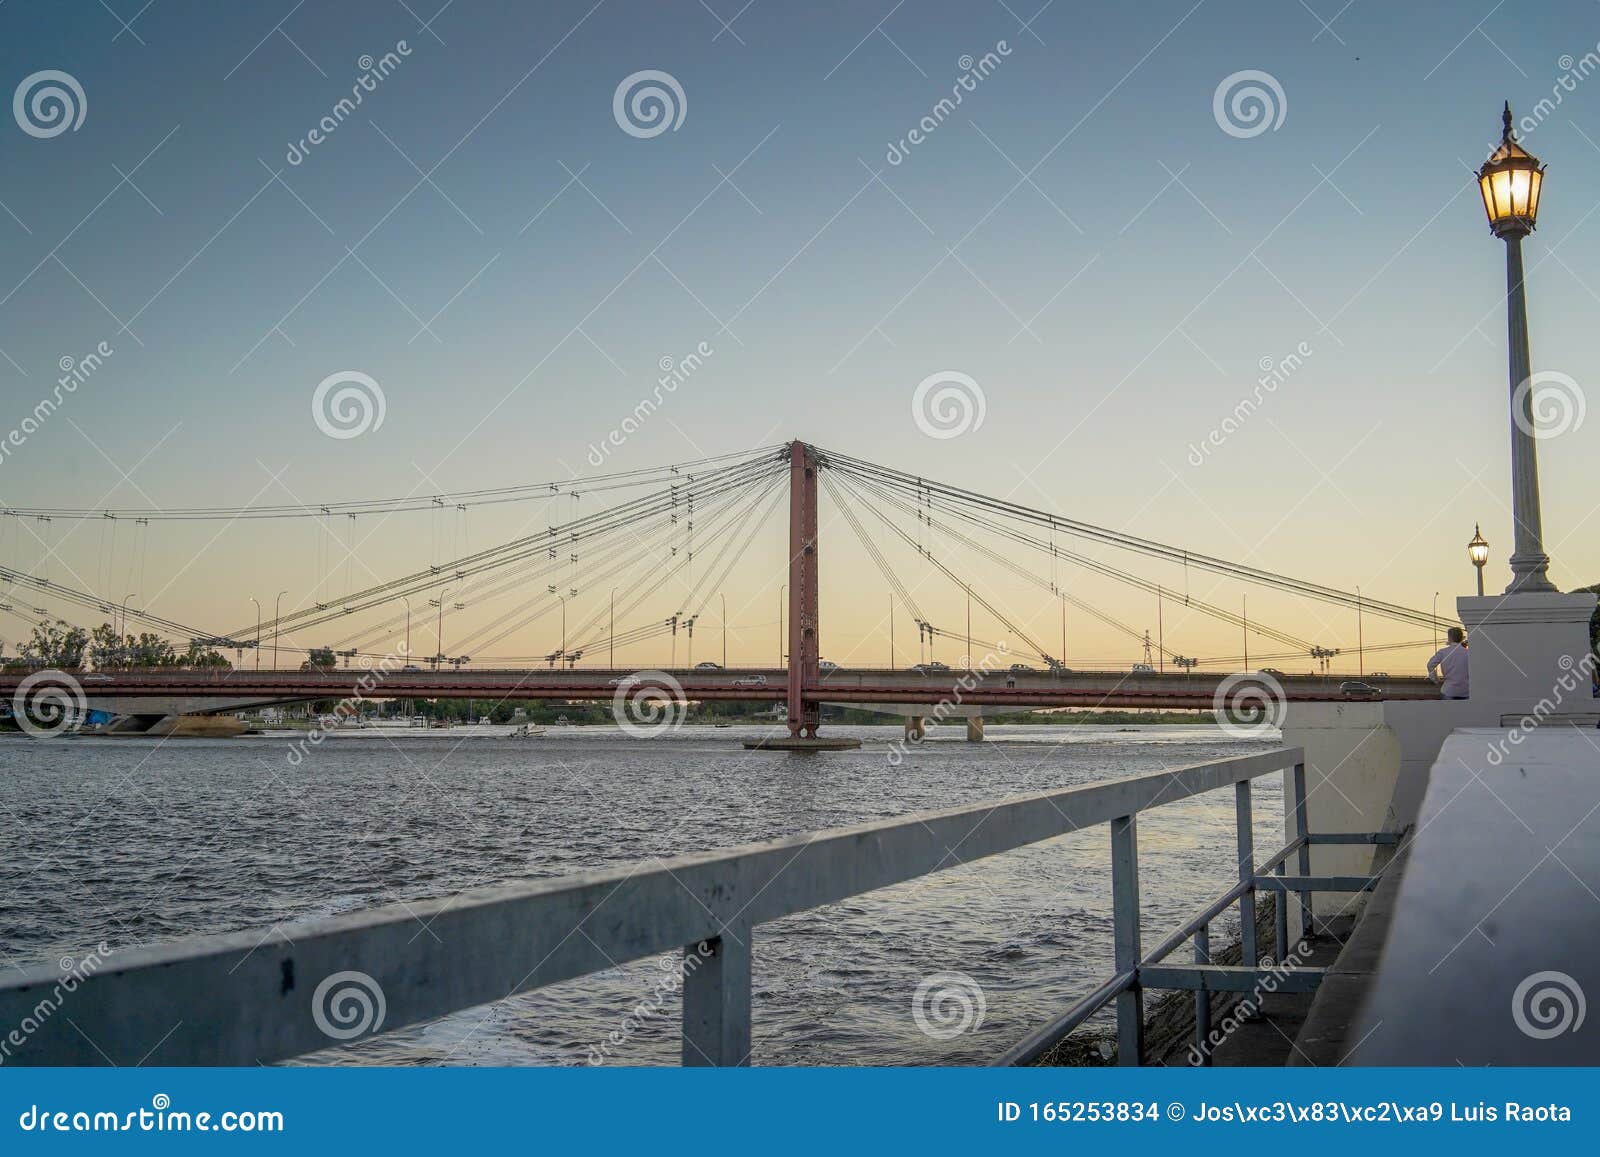 silhouette puente colgante ing marcial candioti over santa fe river against sky